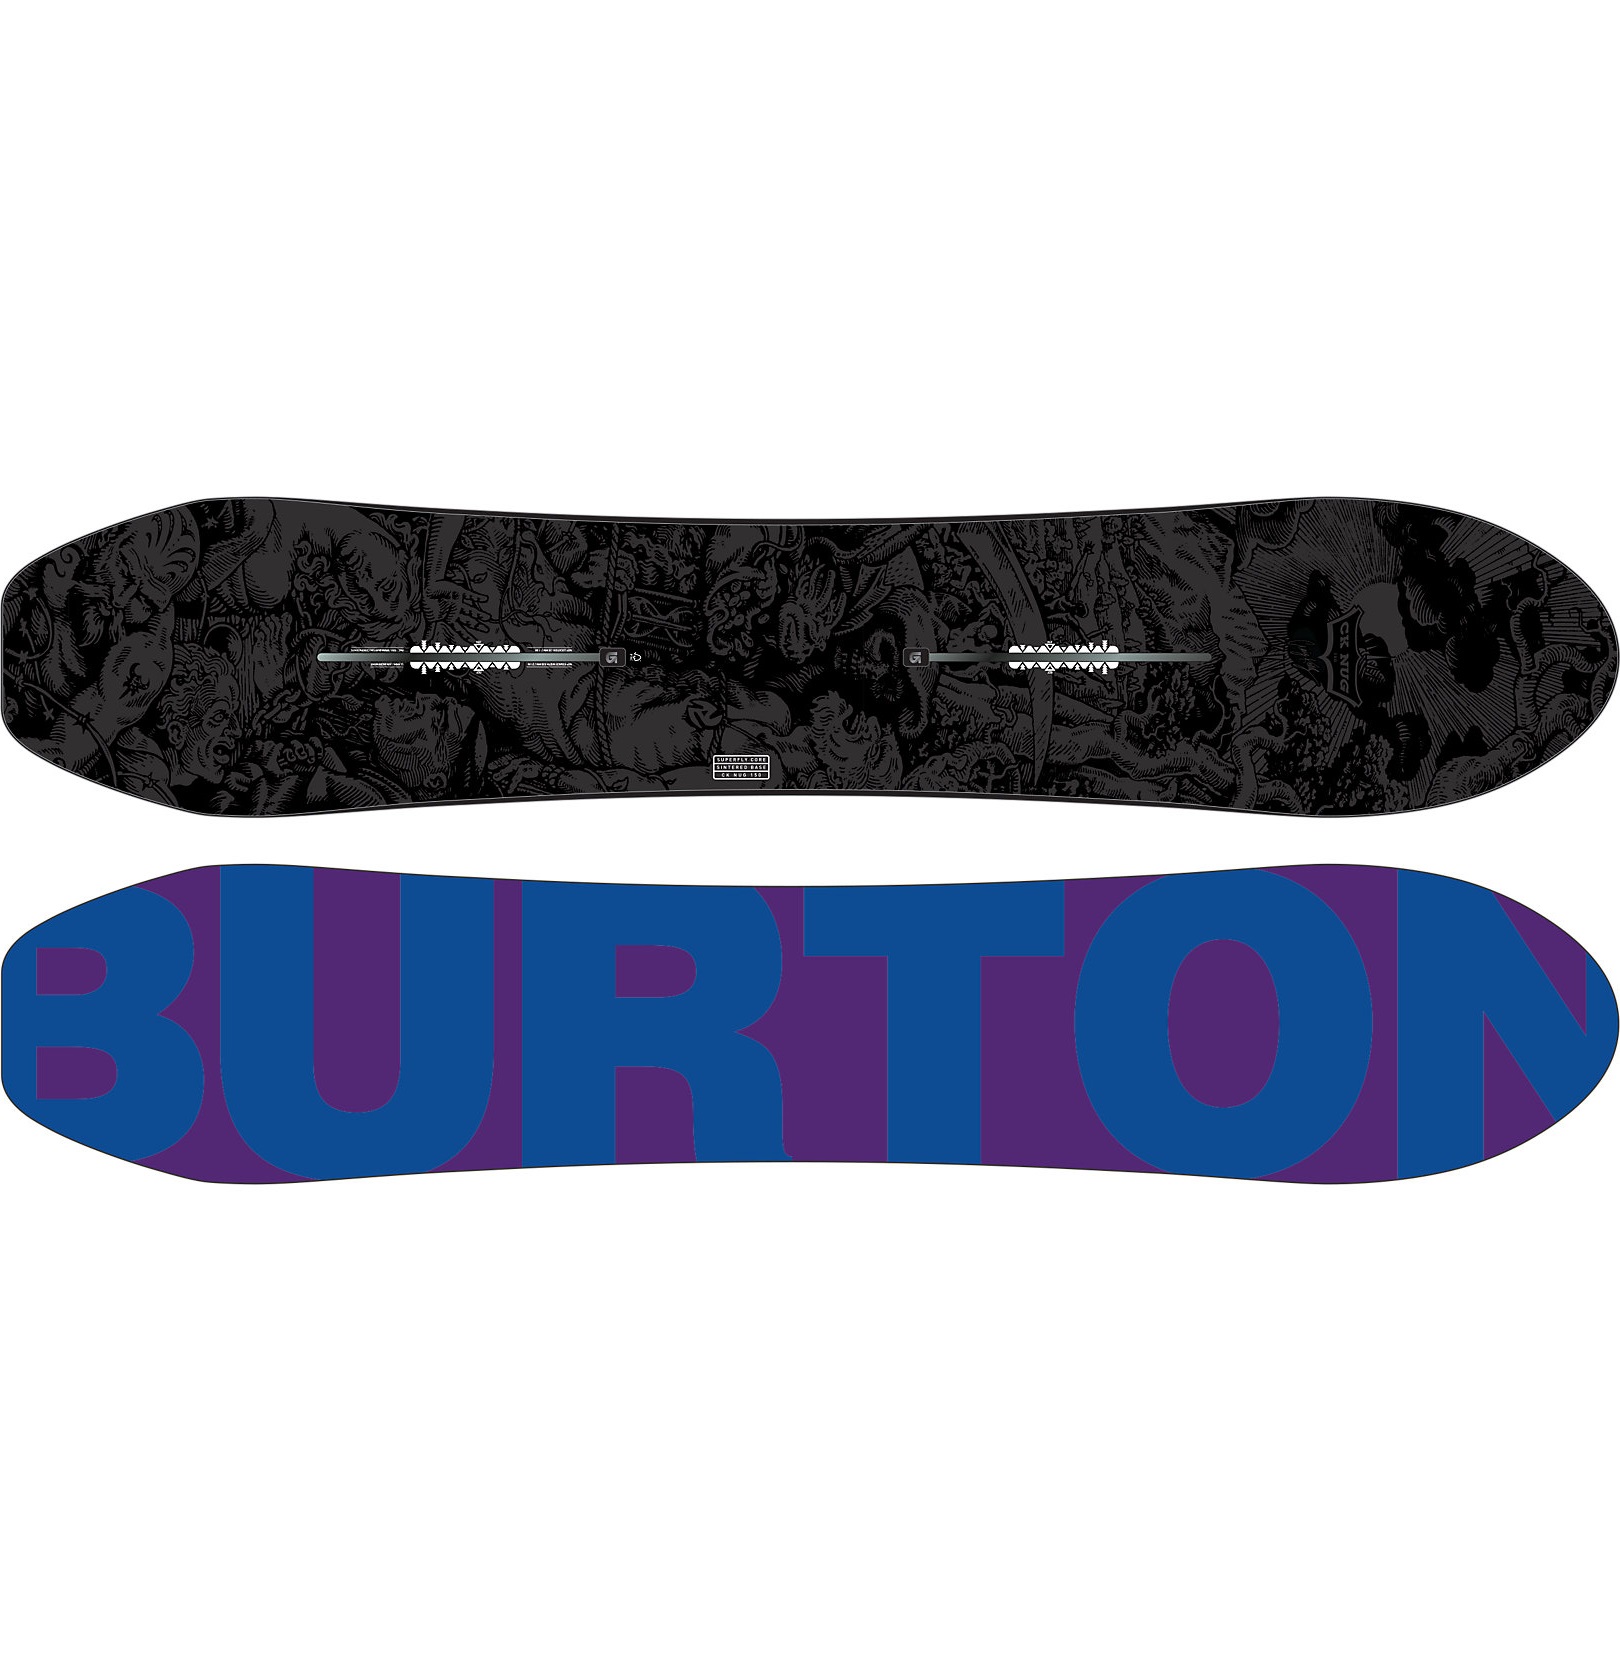 Method Mag Burton CK Nug Snowboard